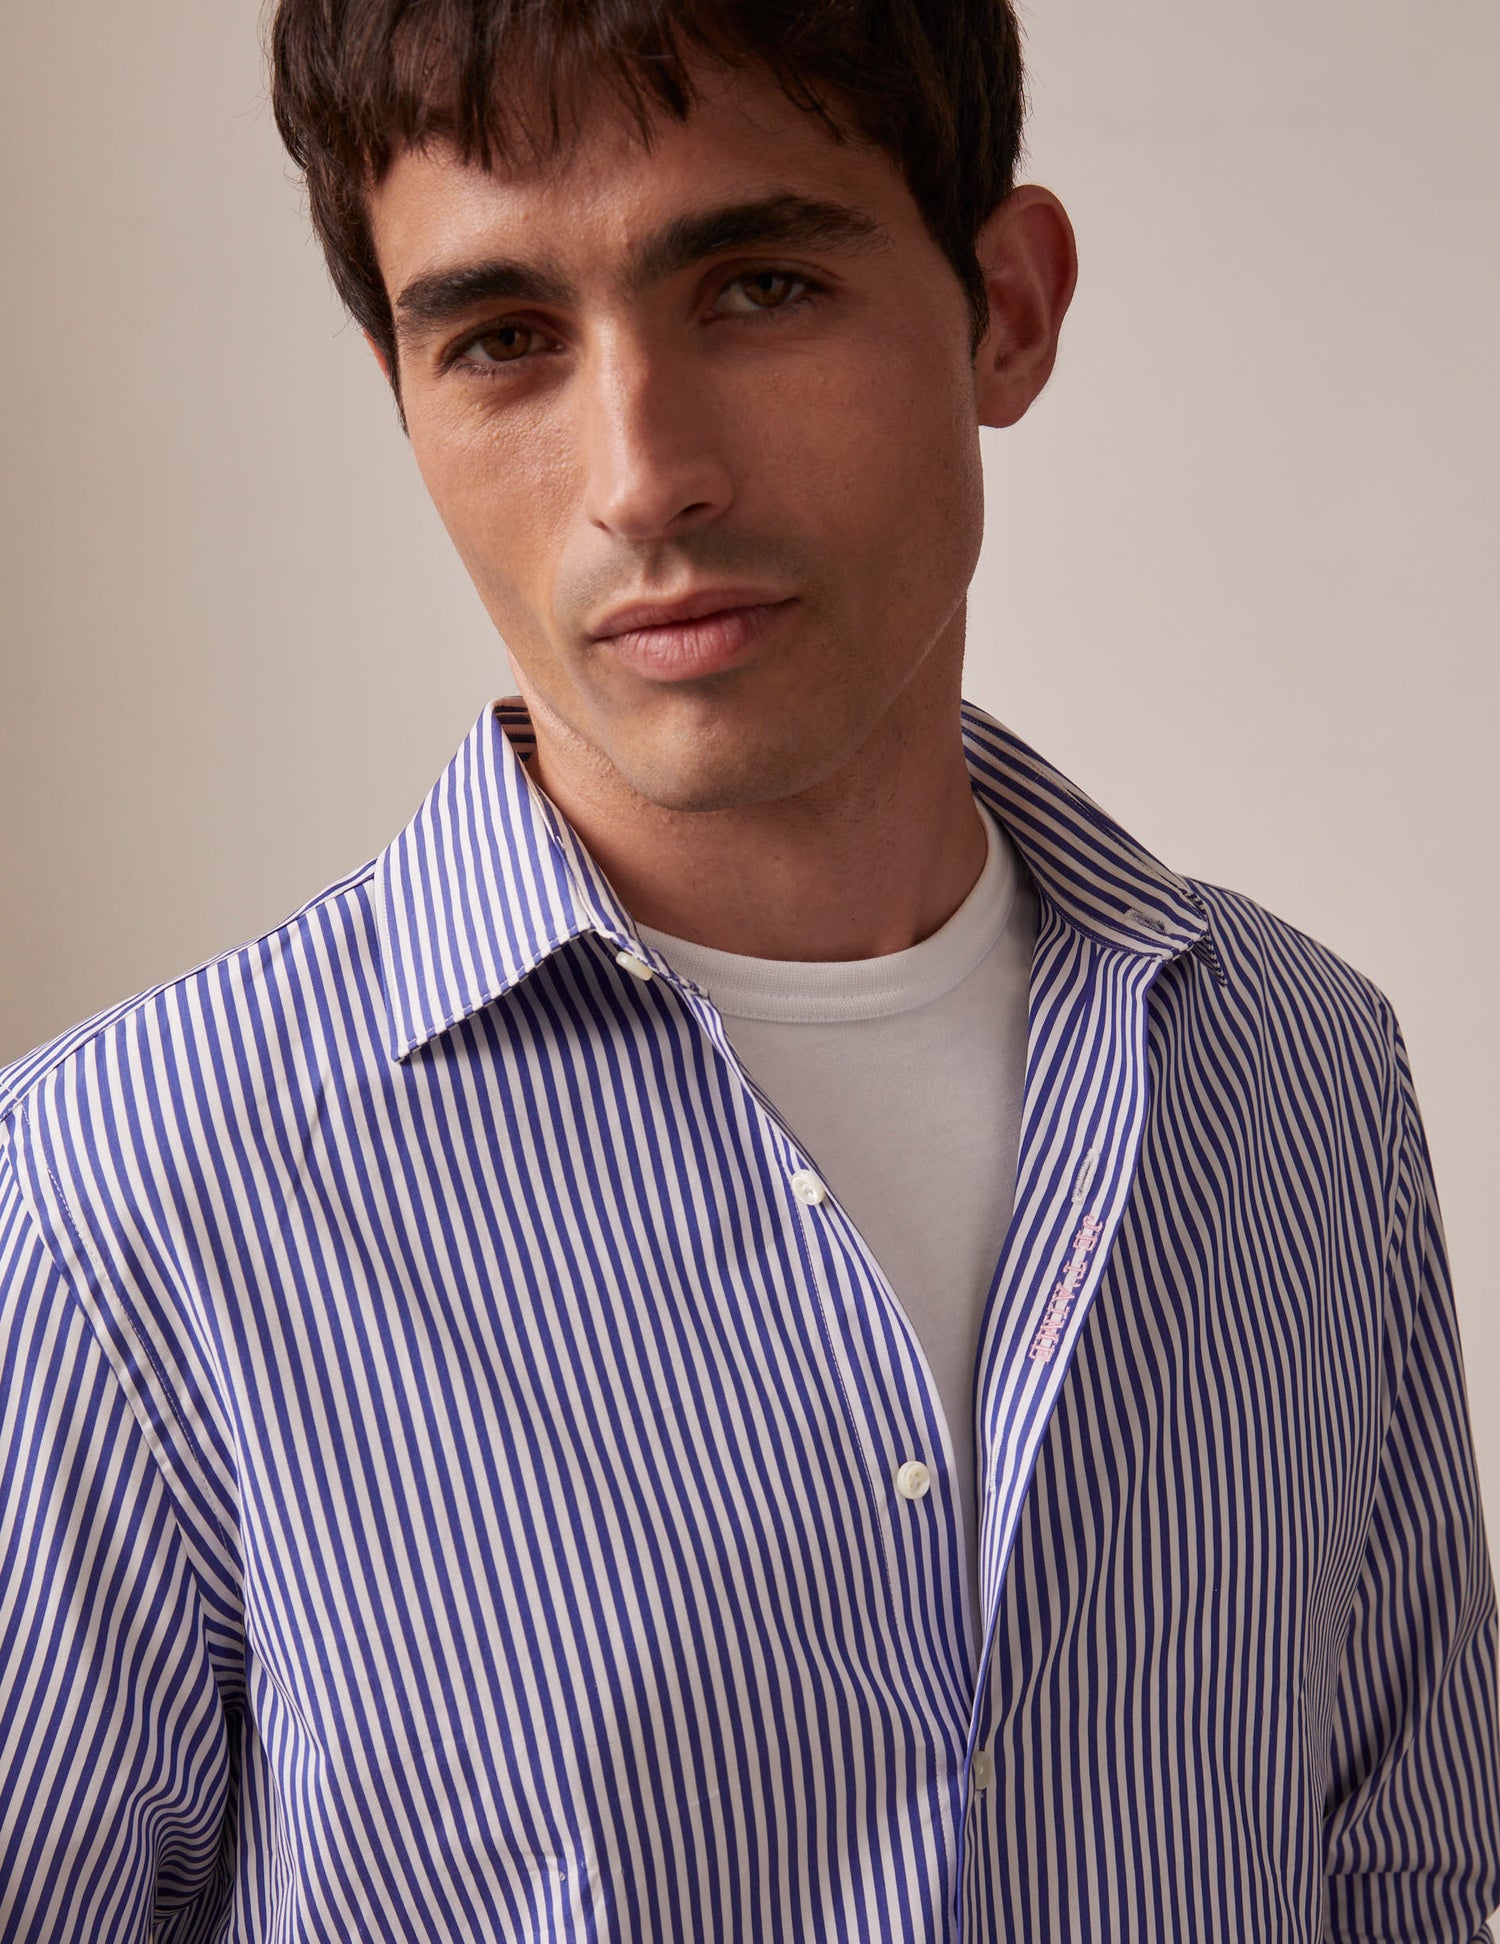 Unisex “Je t'aime” navy blue striped shirt - Poplin - Figaret Collar